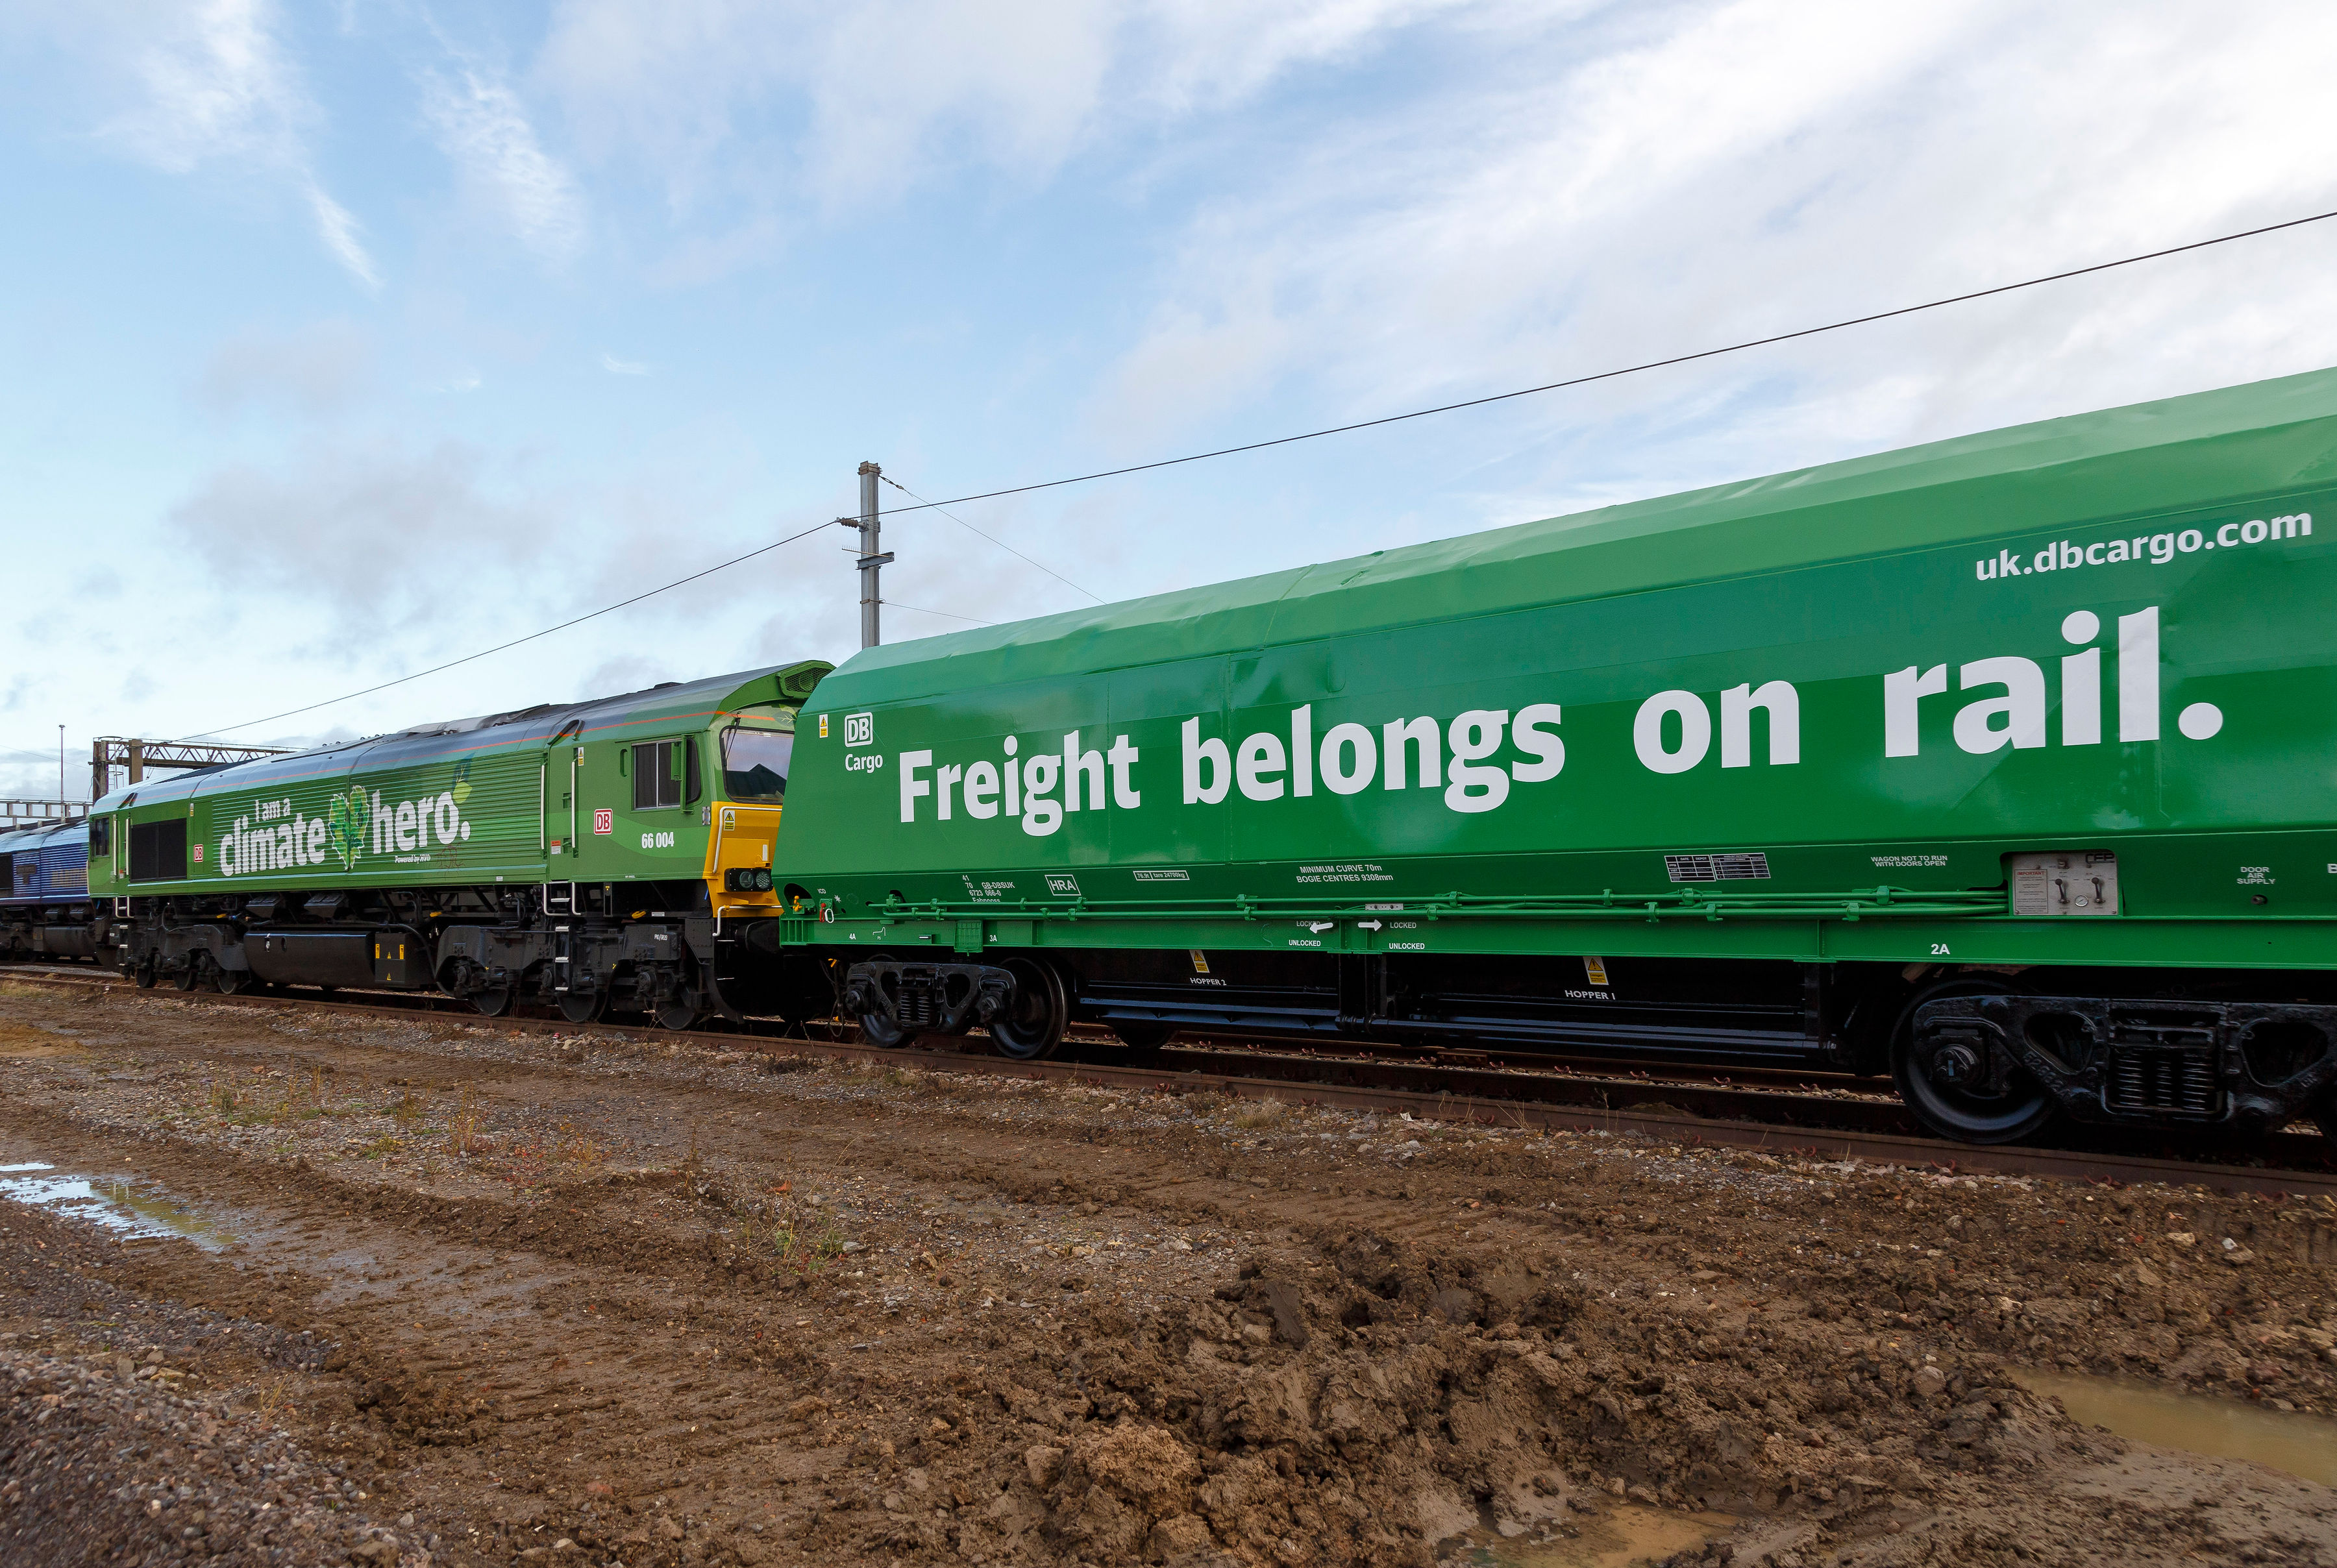 Freight belongs on rail wagon